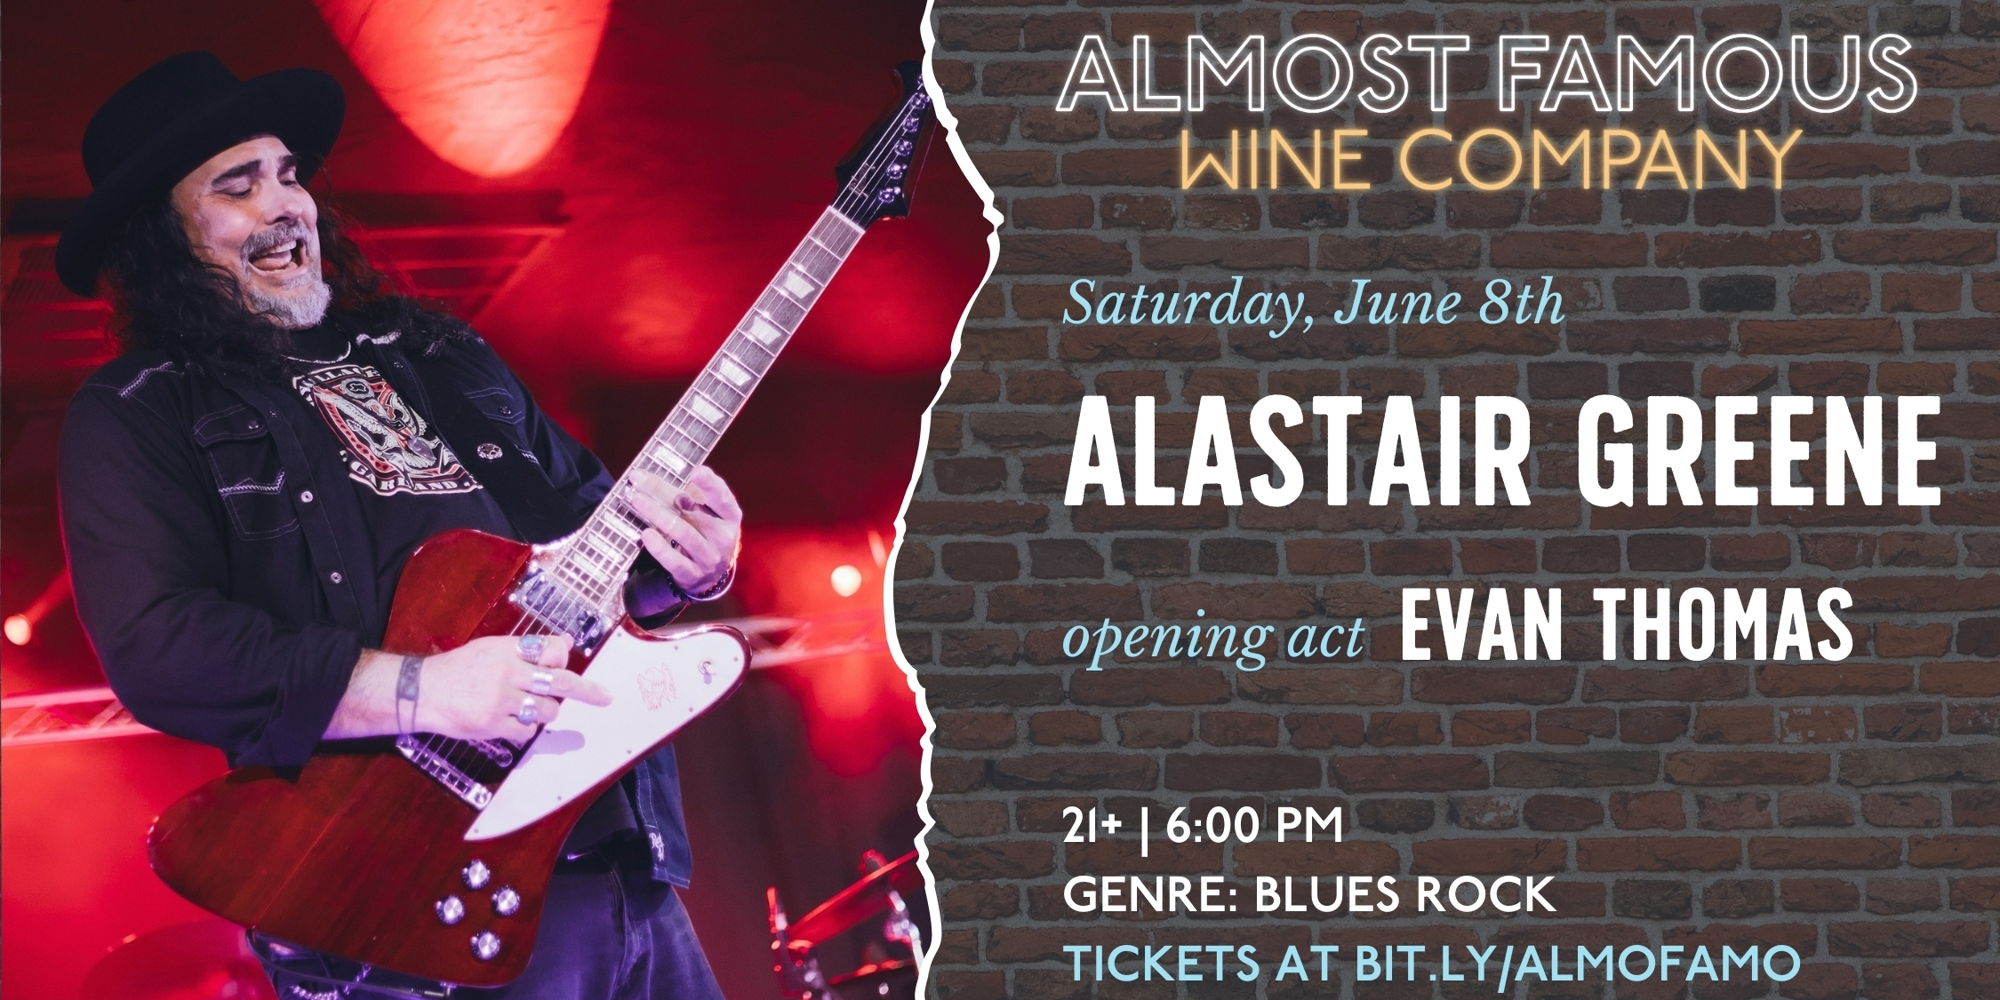 Former Alan Parsons blues rock guitarist Alastair Greene, with opener Evan Thomas promotional image